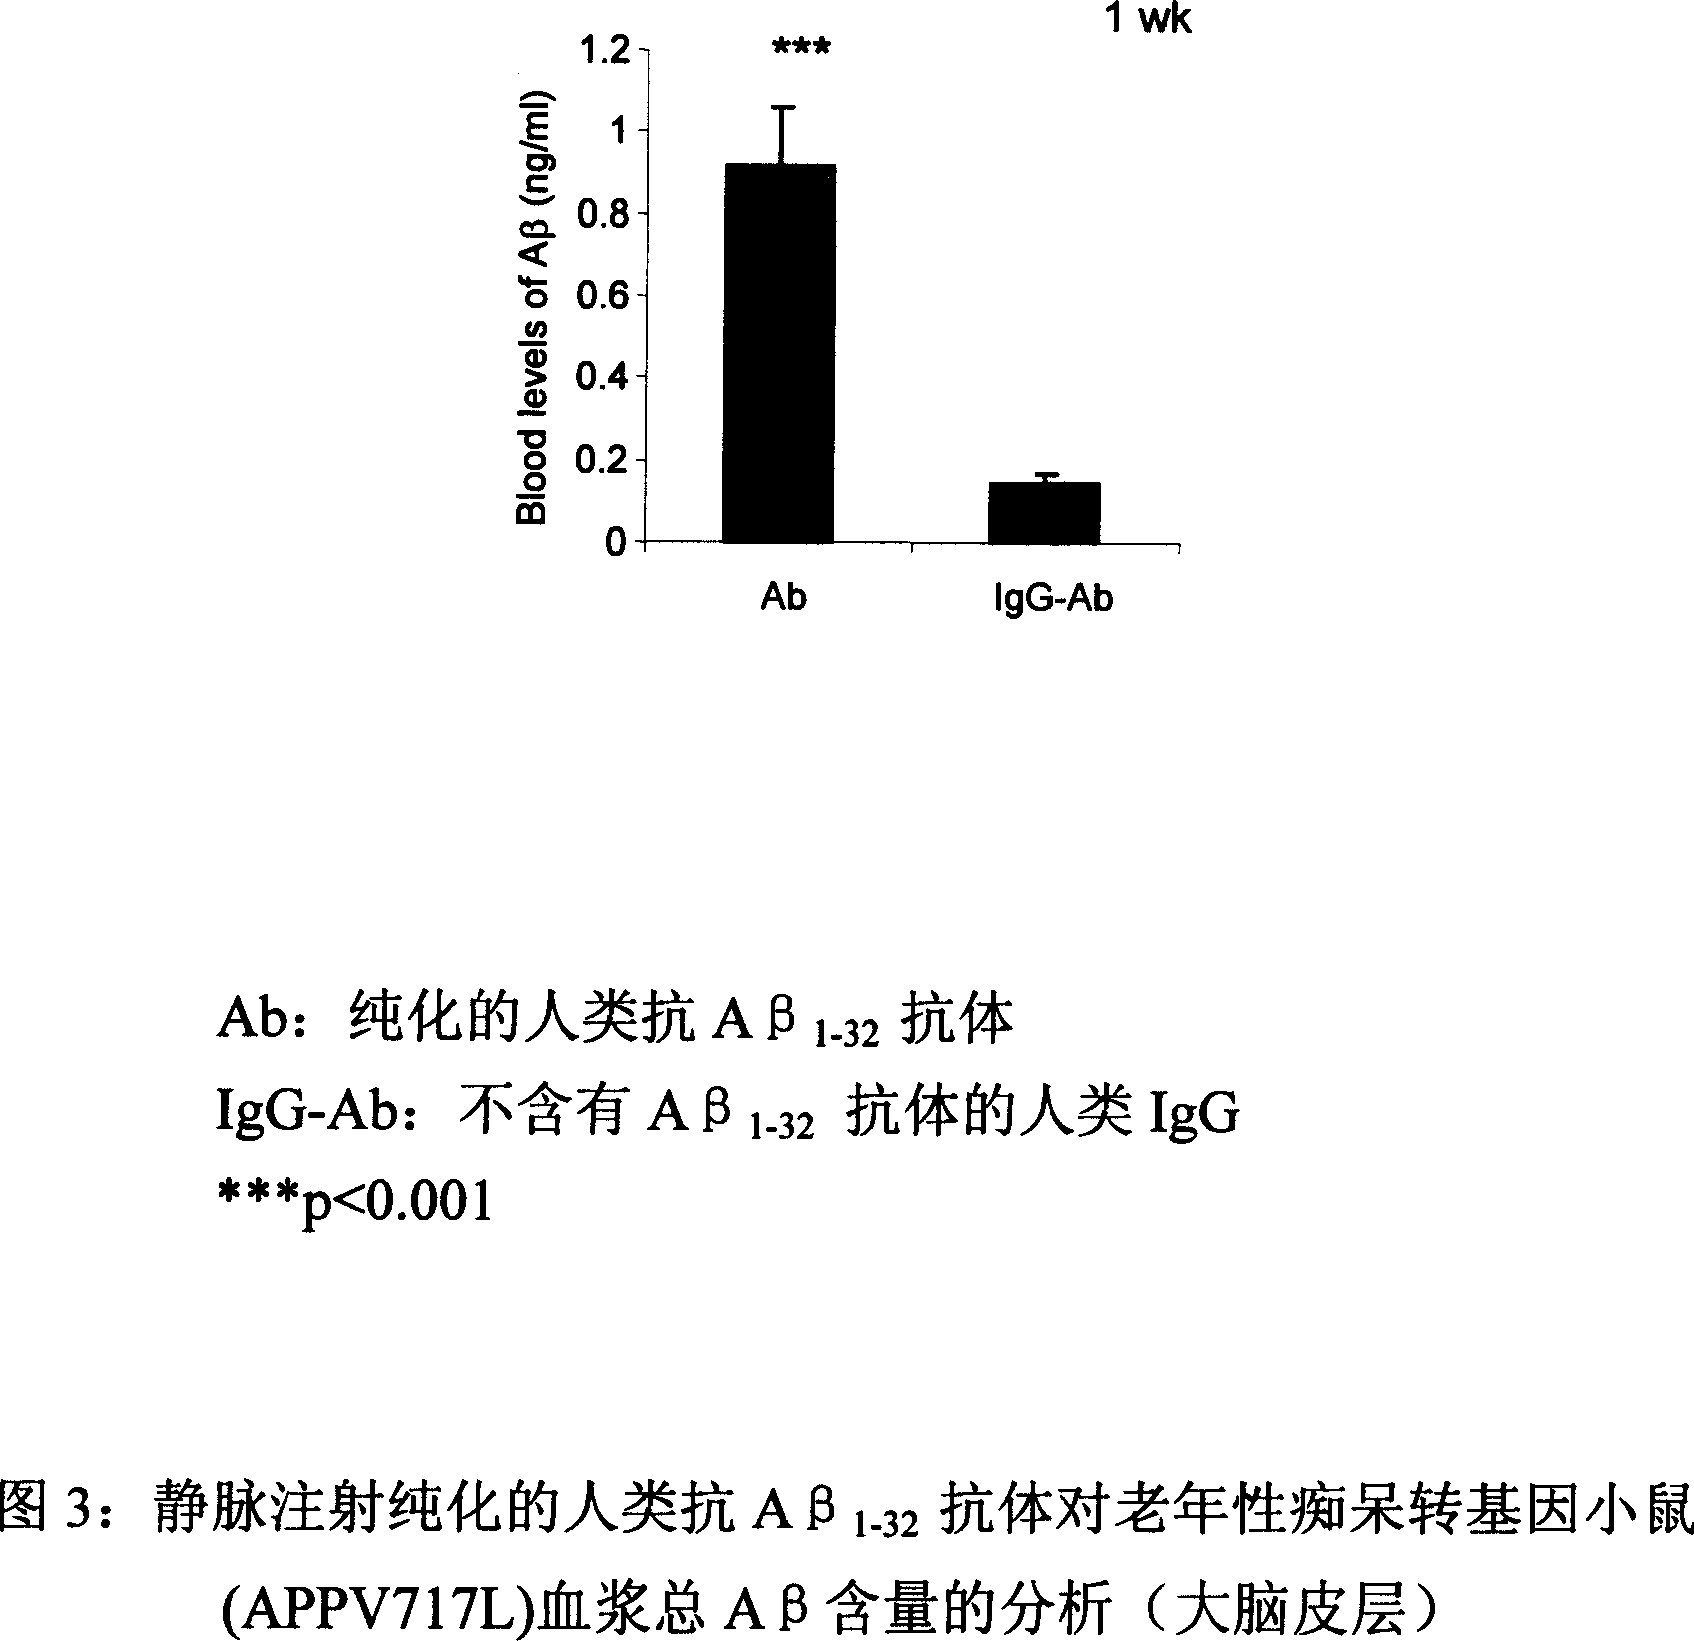 Human anti-Abeta(1-32) amyloid antibody, purifying method and use thereof